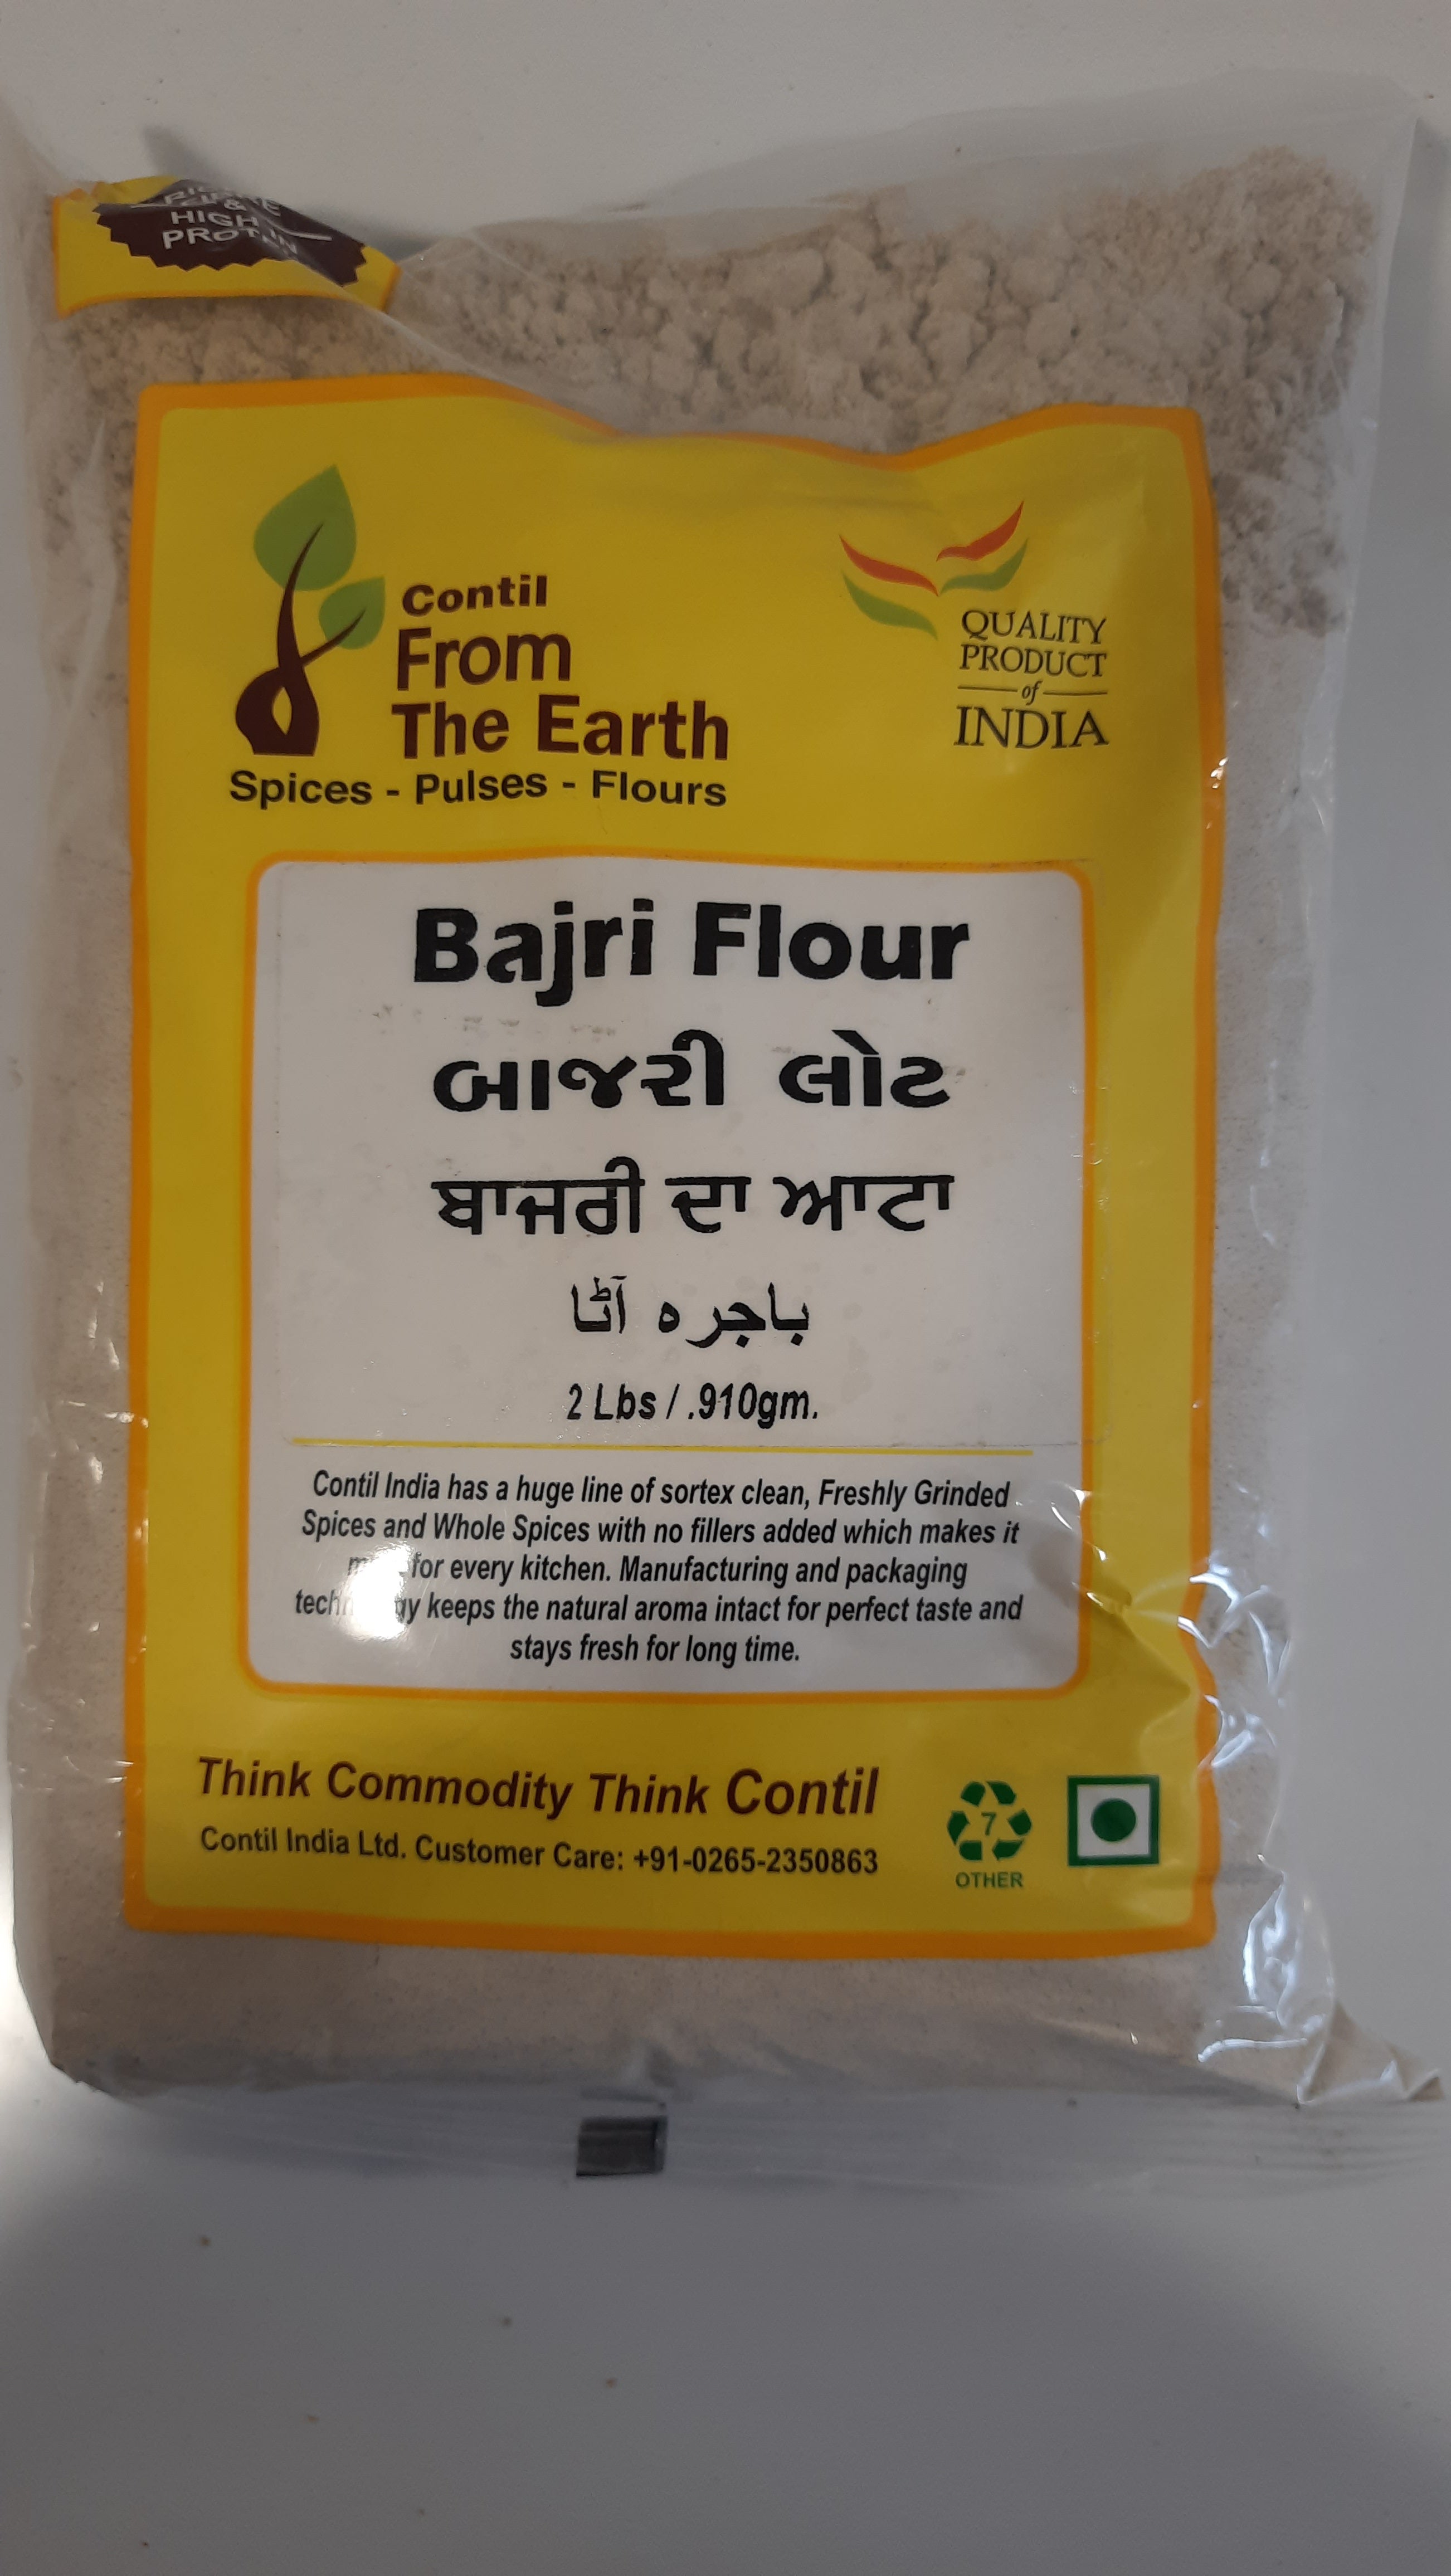 From the Earth - Bajri Flour 2lb